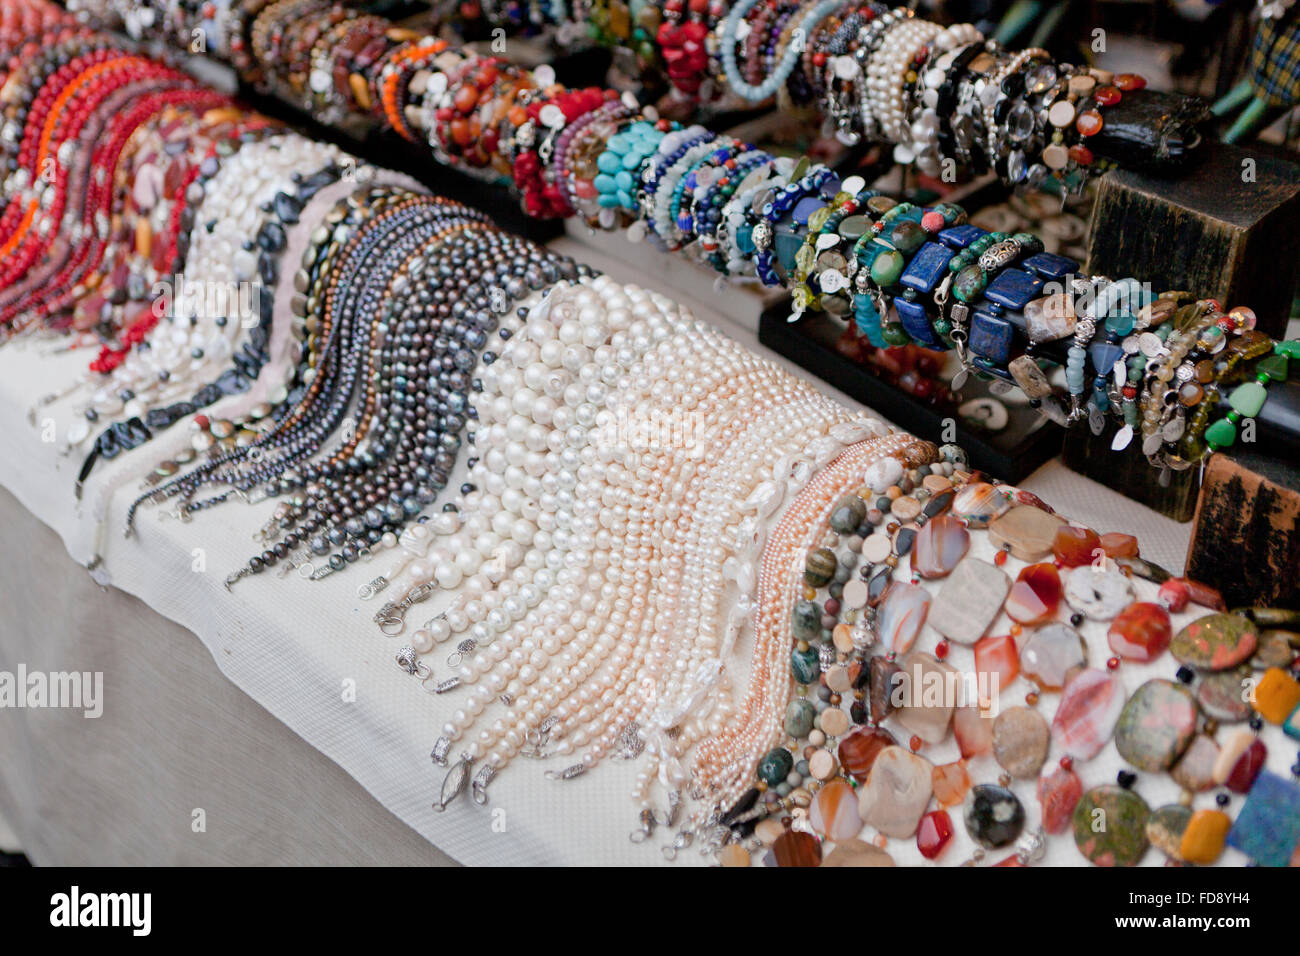 Jewelry display - USA Stock Photo